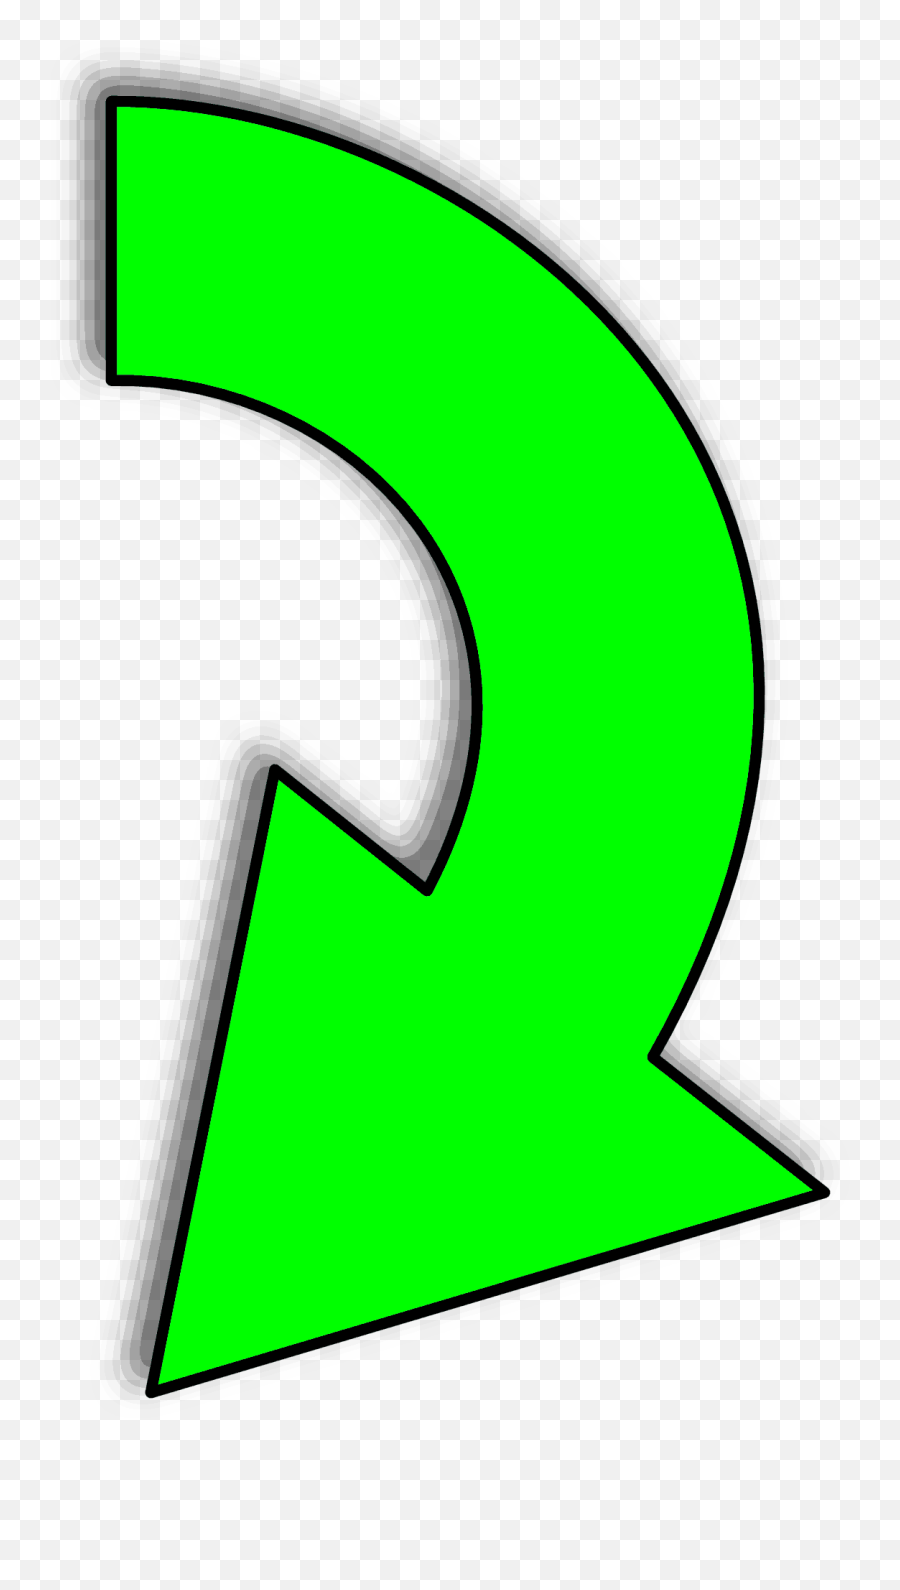 Green Arrow Down Left - Arrow Down Green Emoji,Green Arrow Emoji